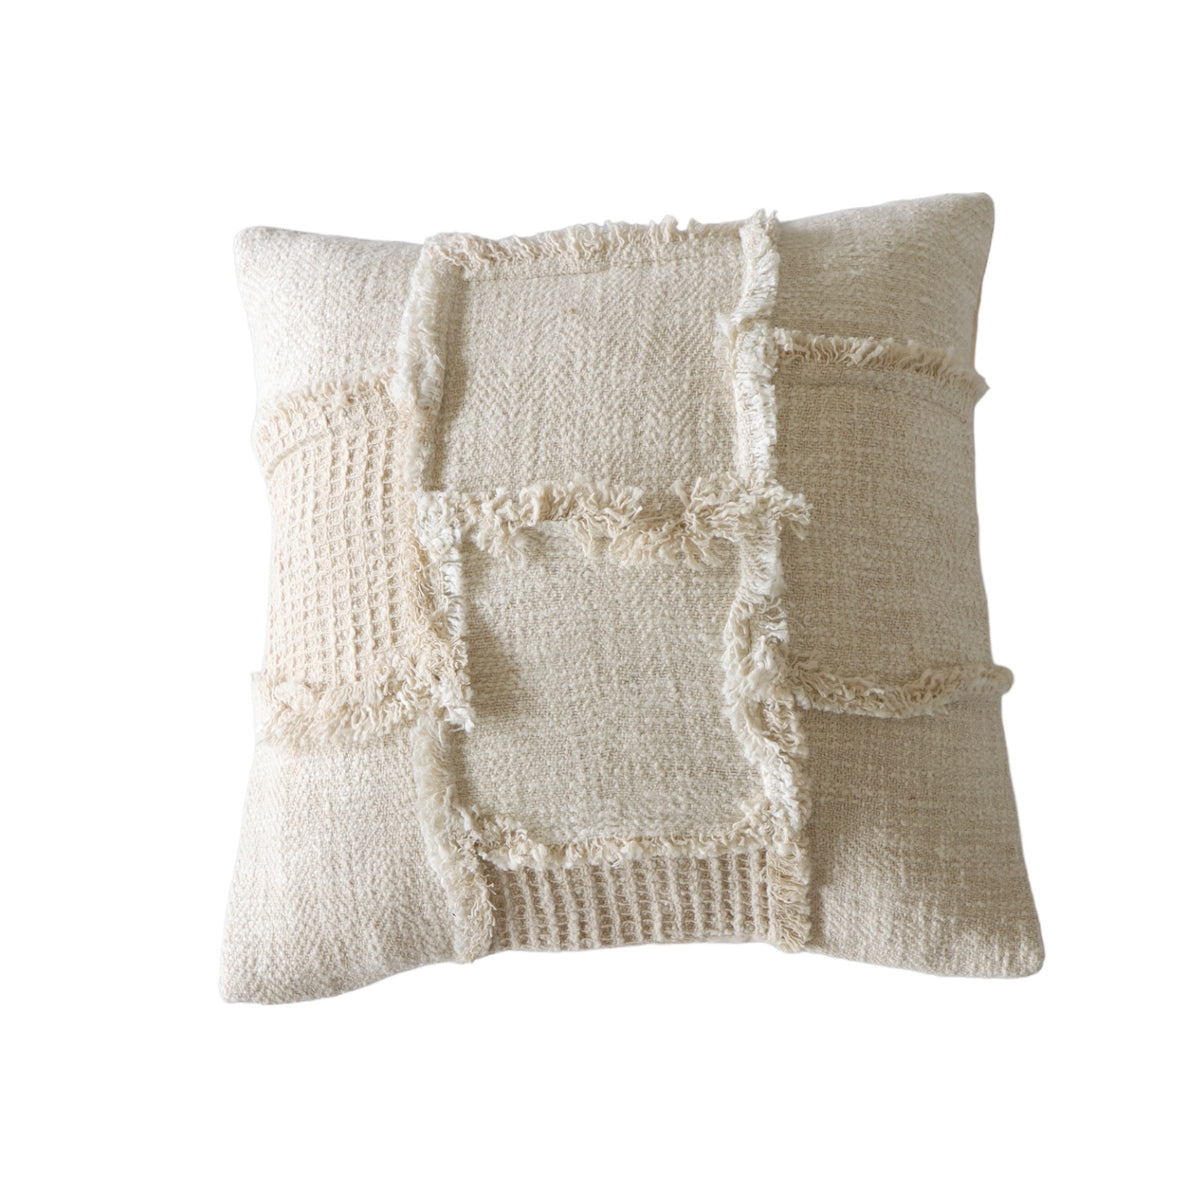 Rebellious Edge Woven Cotton Frayed Patchwork Pillow 18 Inch - Holistic Habitat 